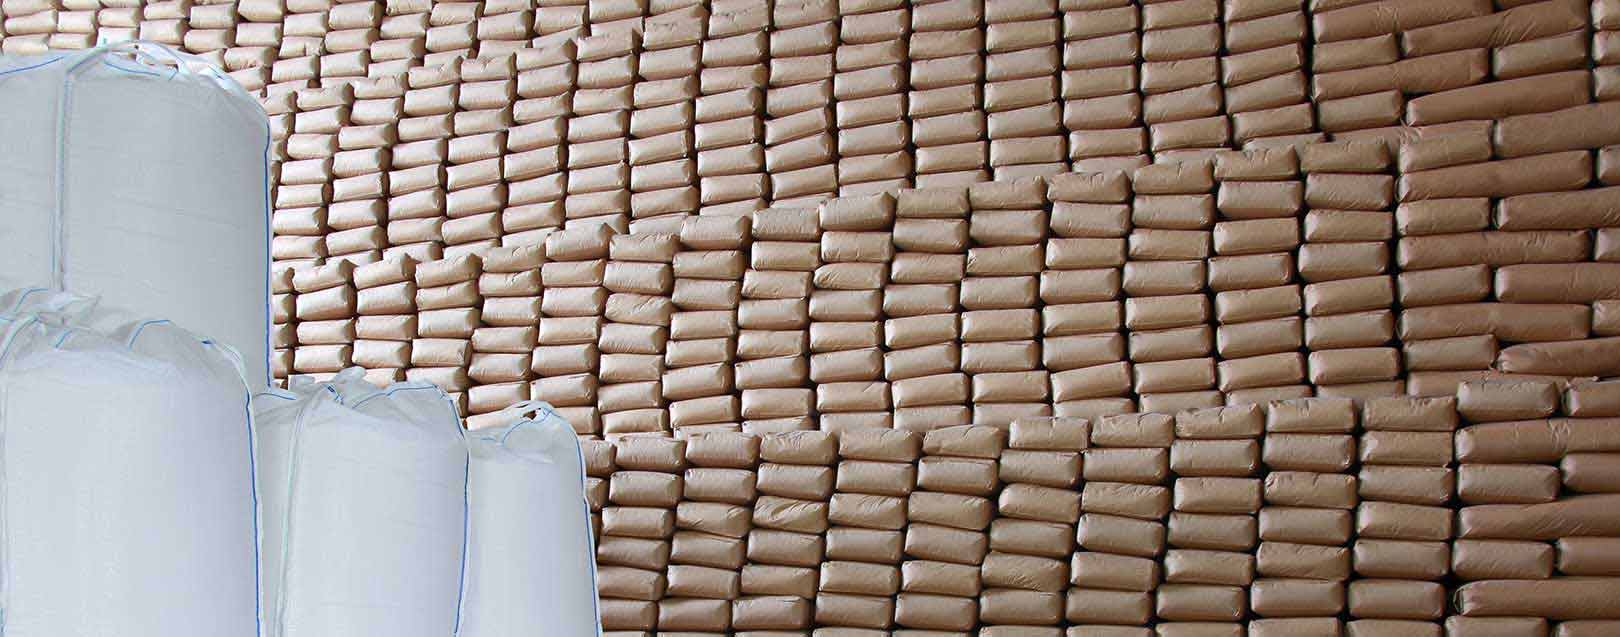 Govt likely to revoke sugar export order